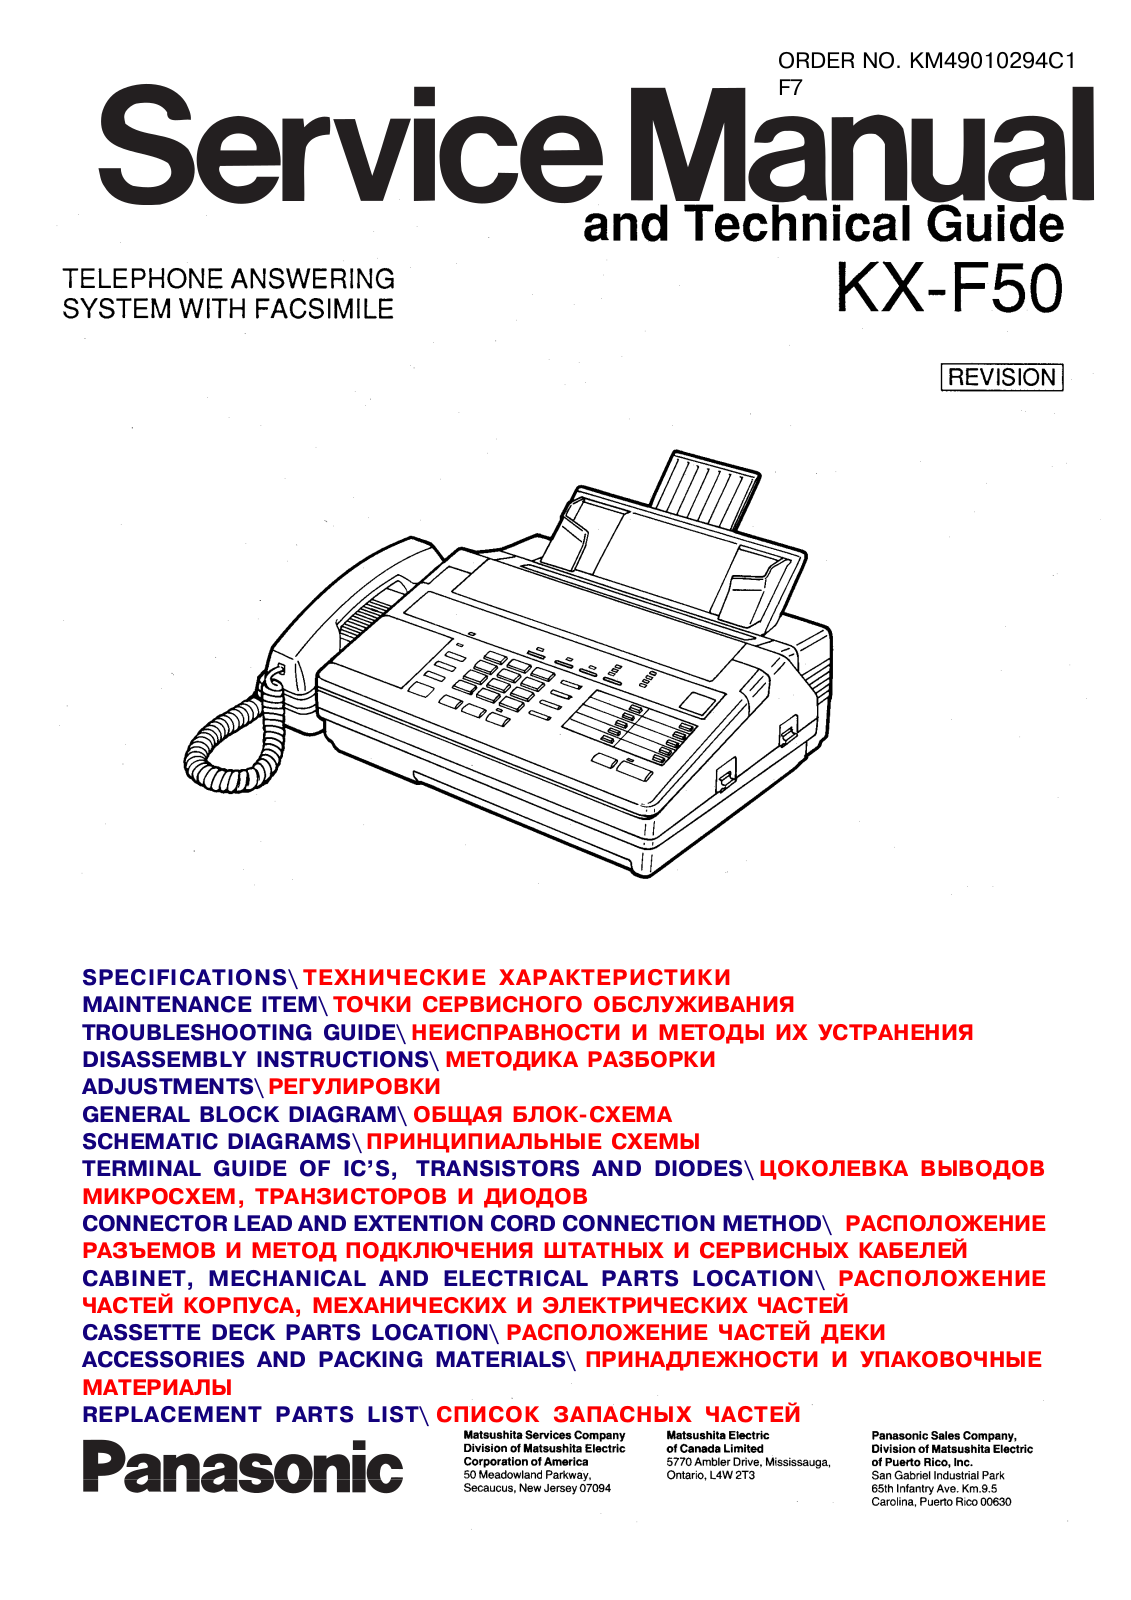 Panasonic Fax KX-F50 Schematic